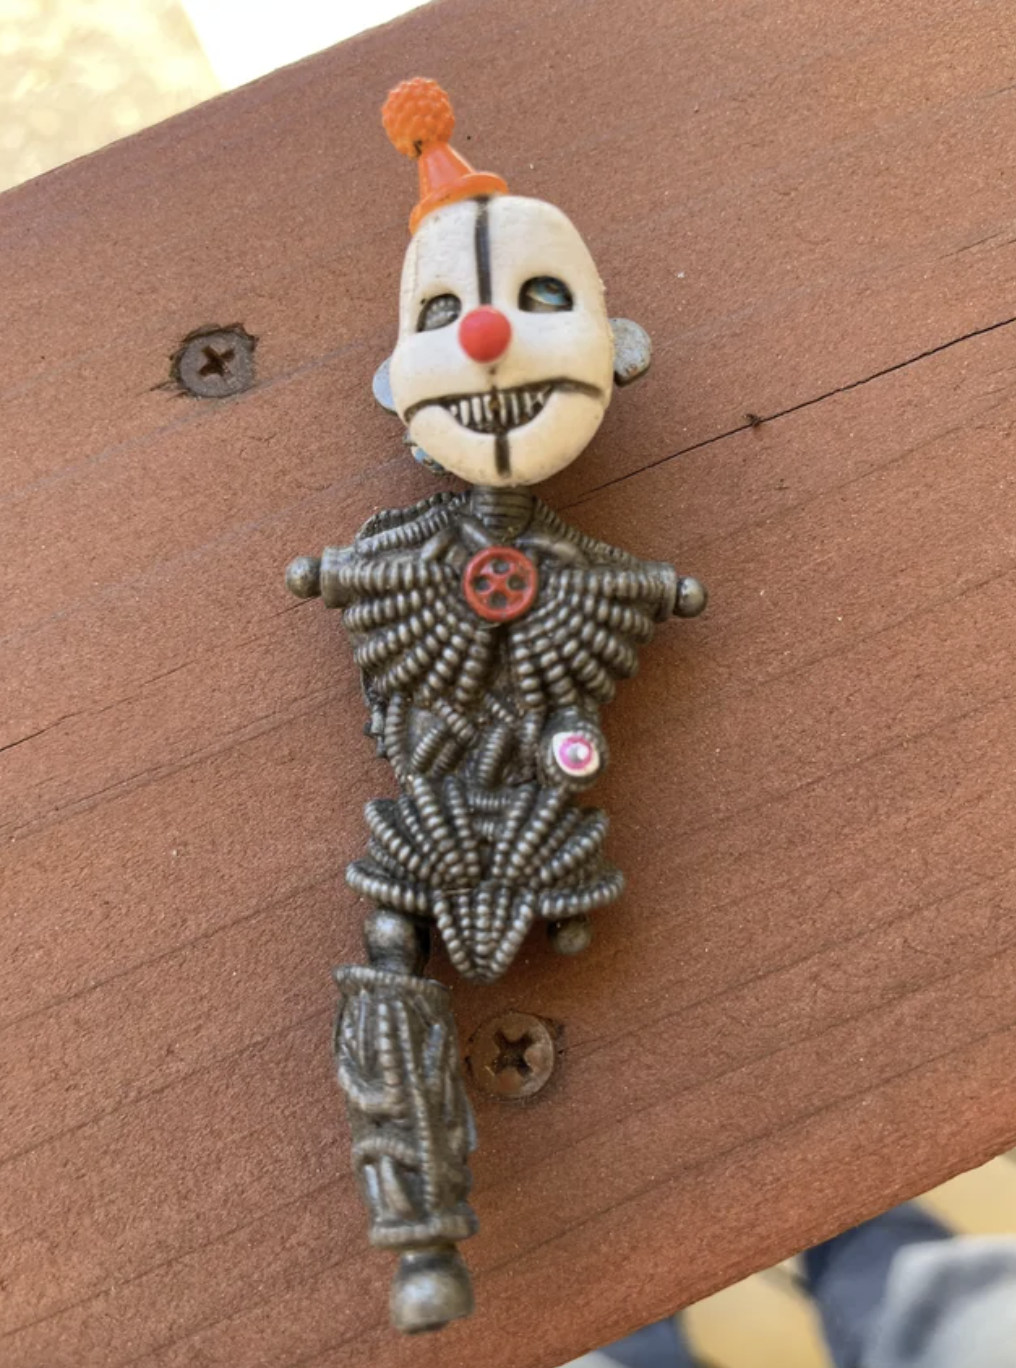 creepy clown doll missing an arm and leg